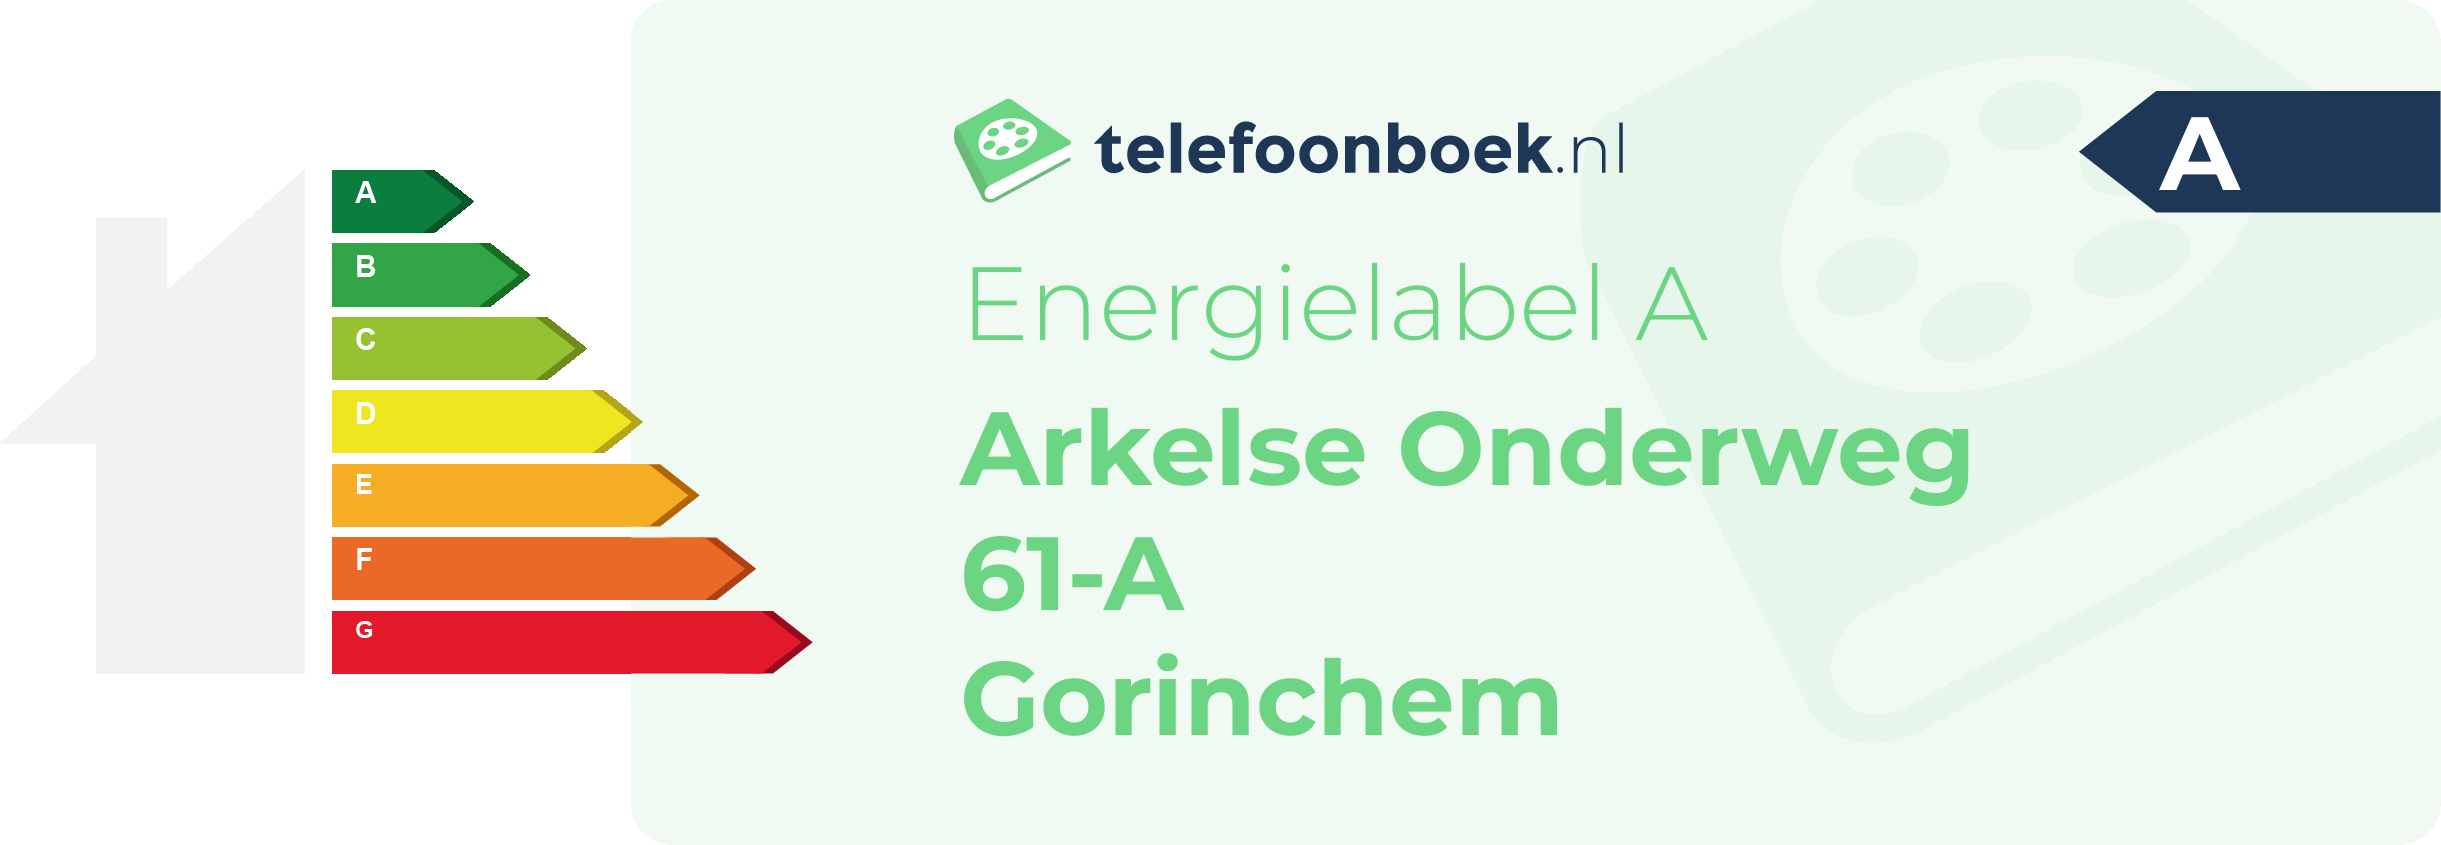 Energielabel Arkelse Onderweg 61-A Gorinchem